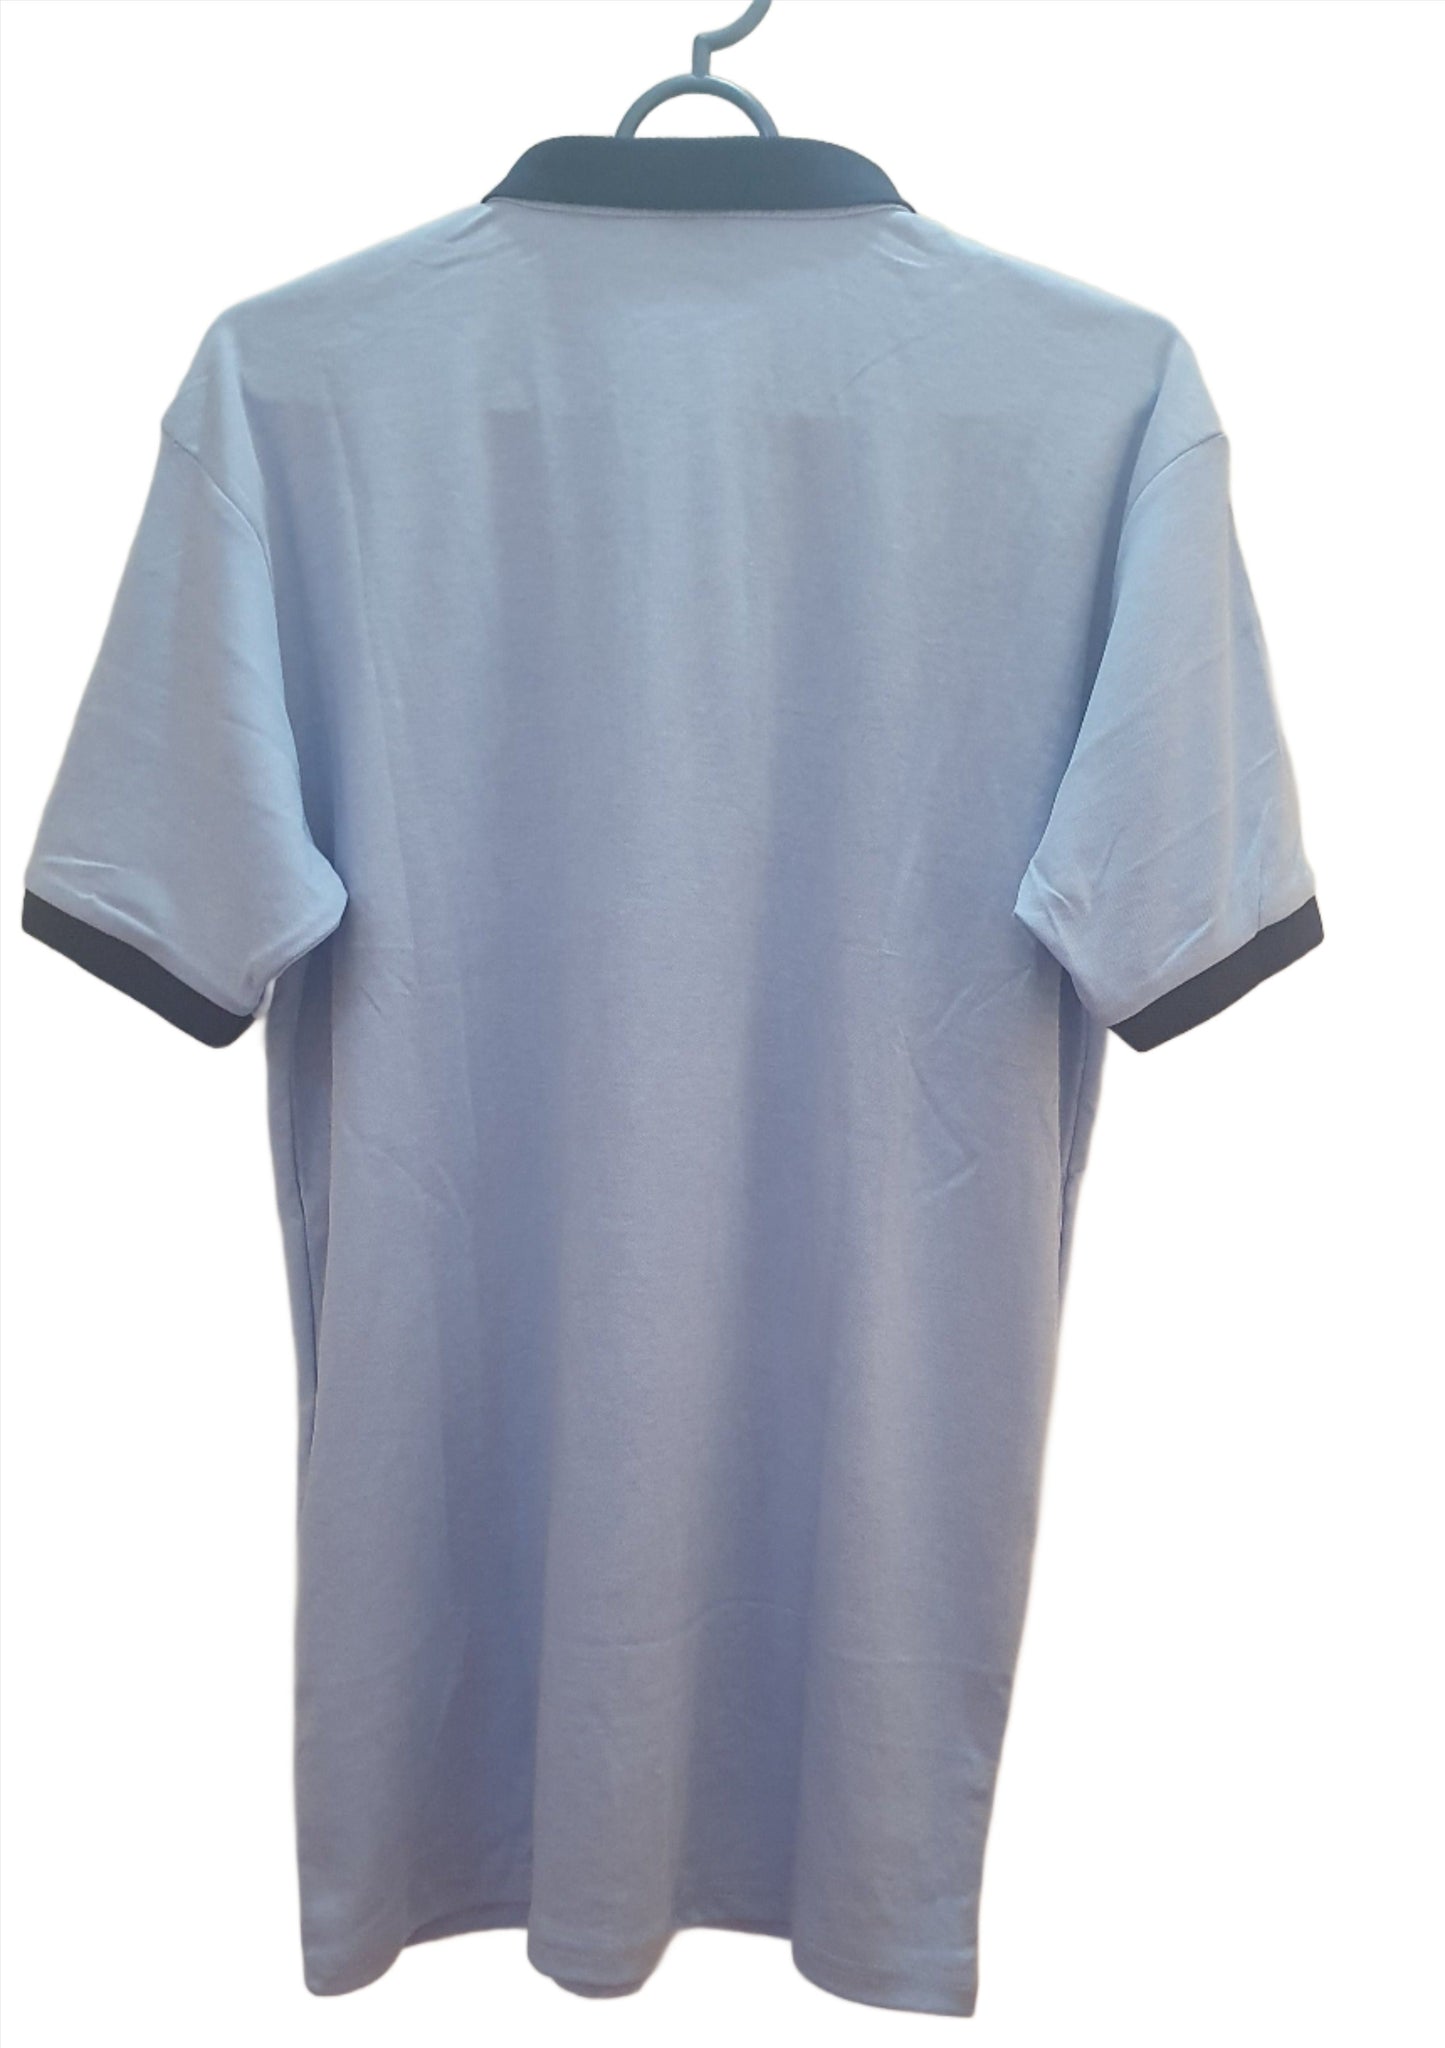 Light Blue Colour POLO Cotton Tshirt